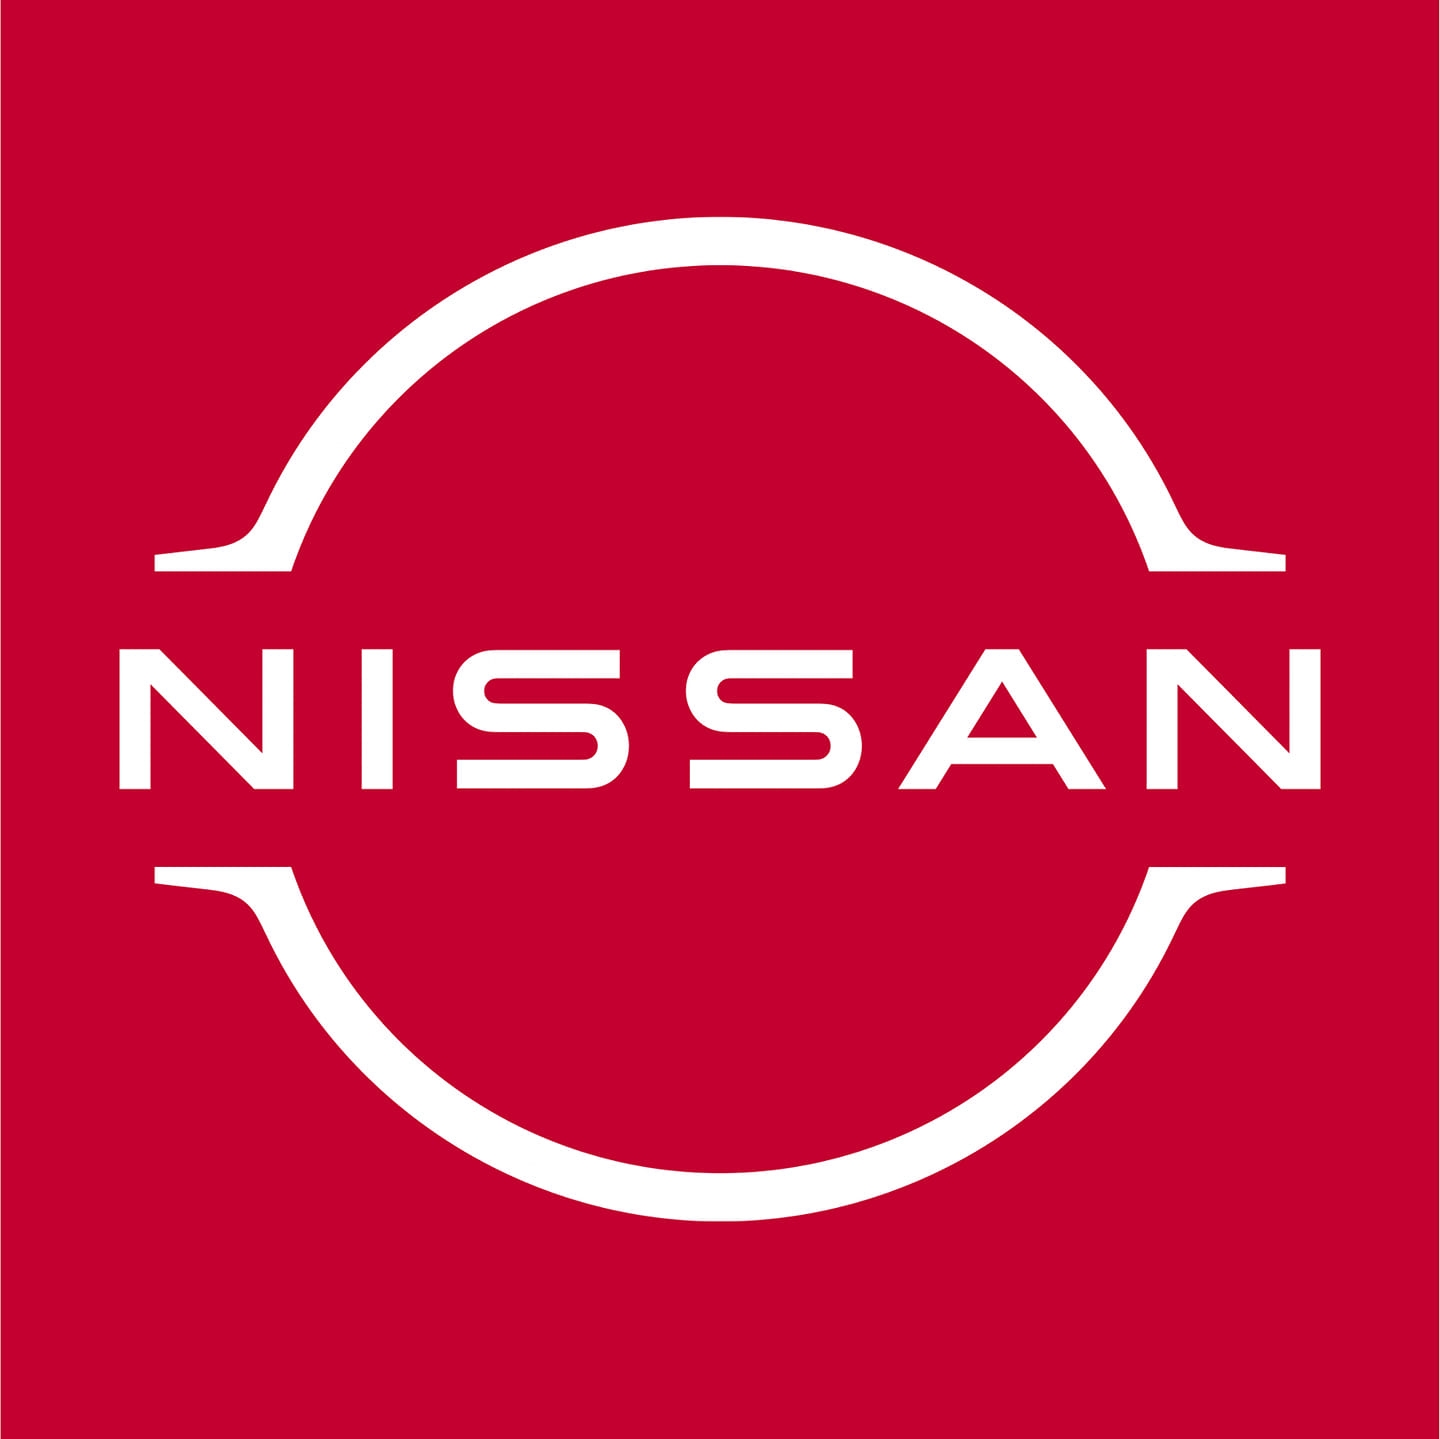 NIGLA NISSAN - Logo